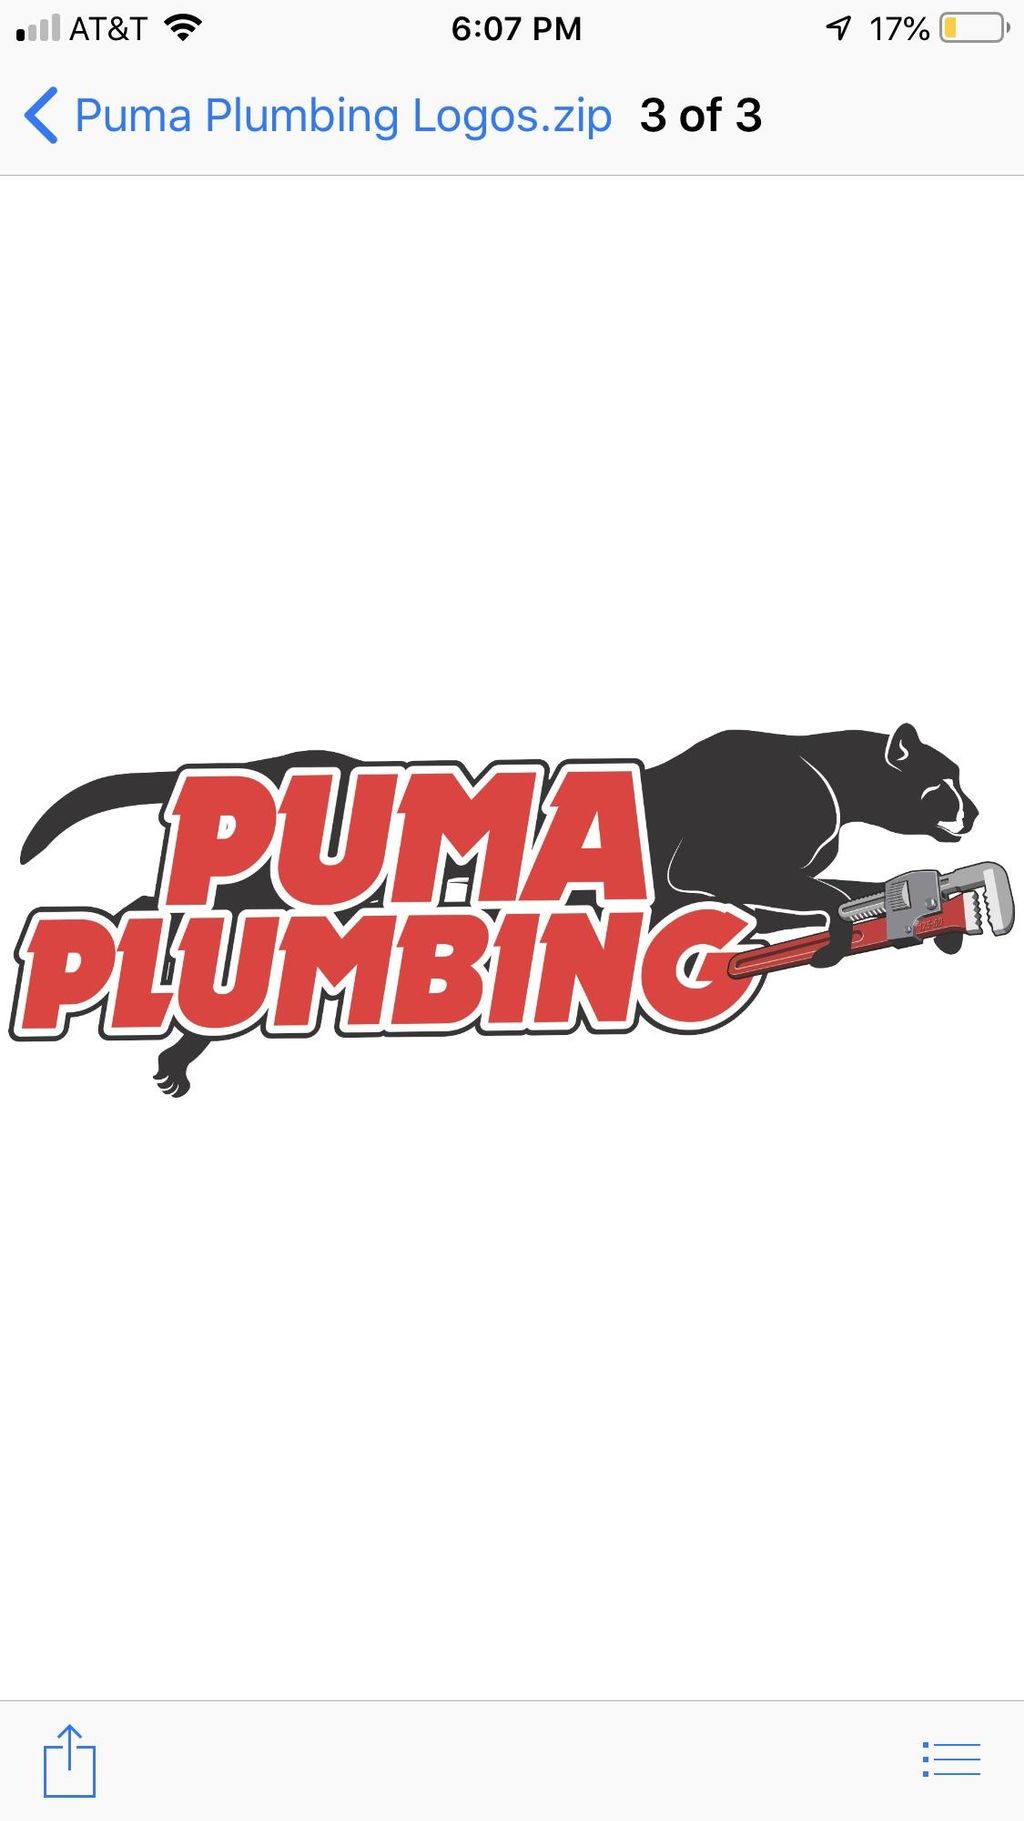 Puma Plumbing